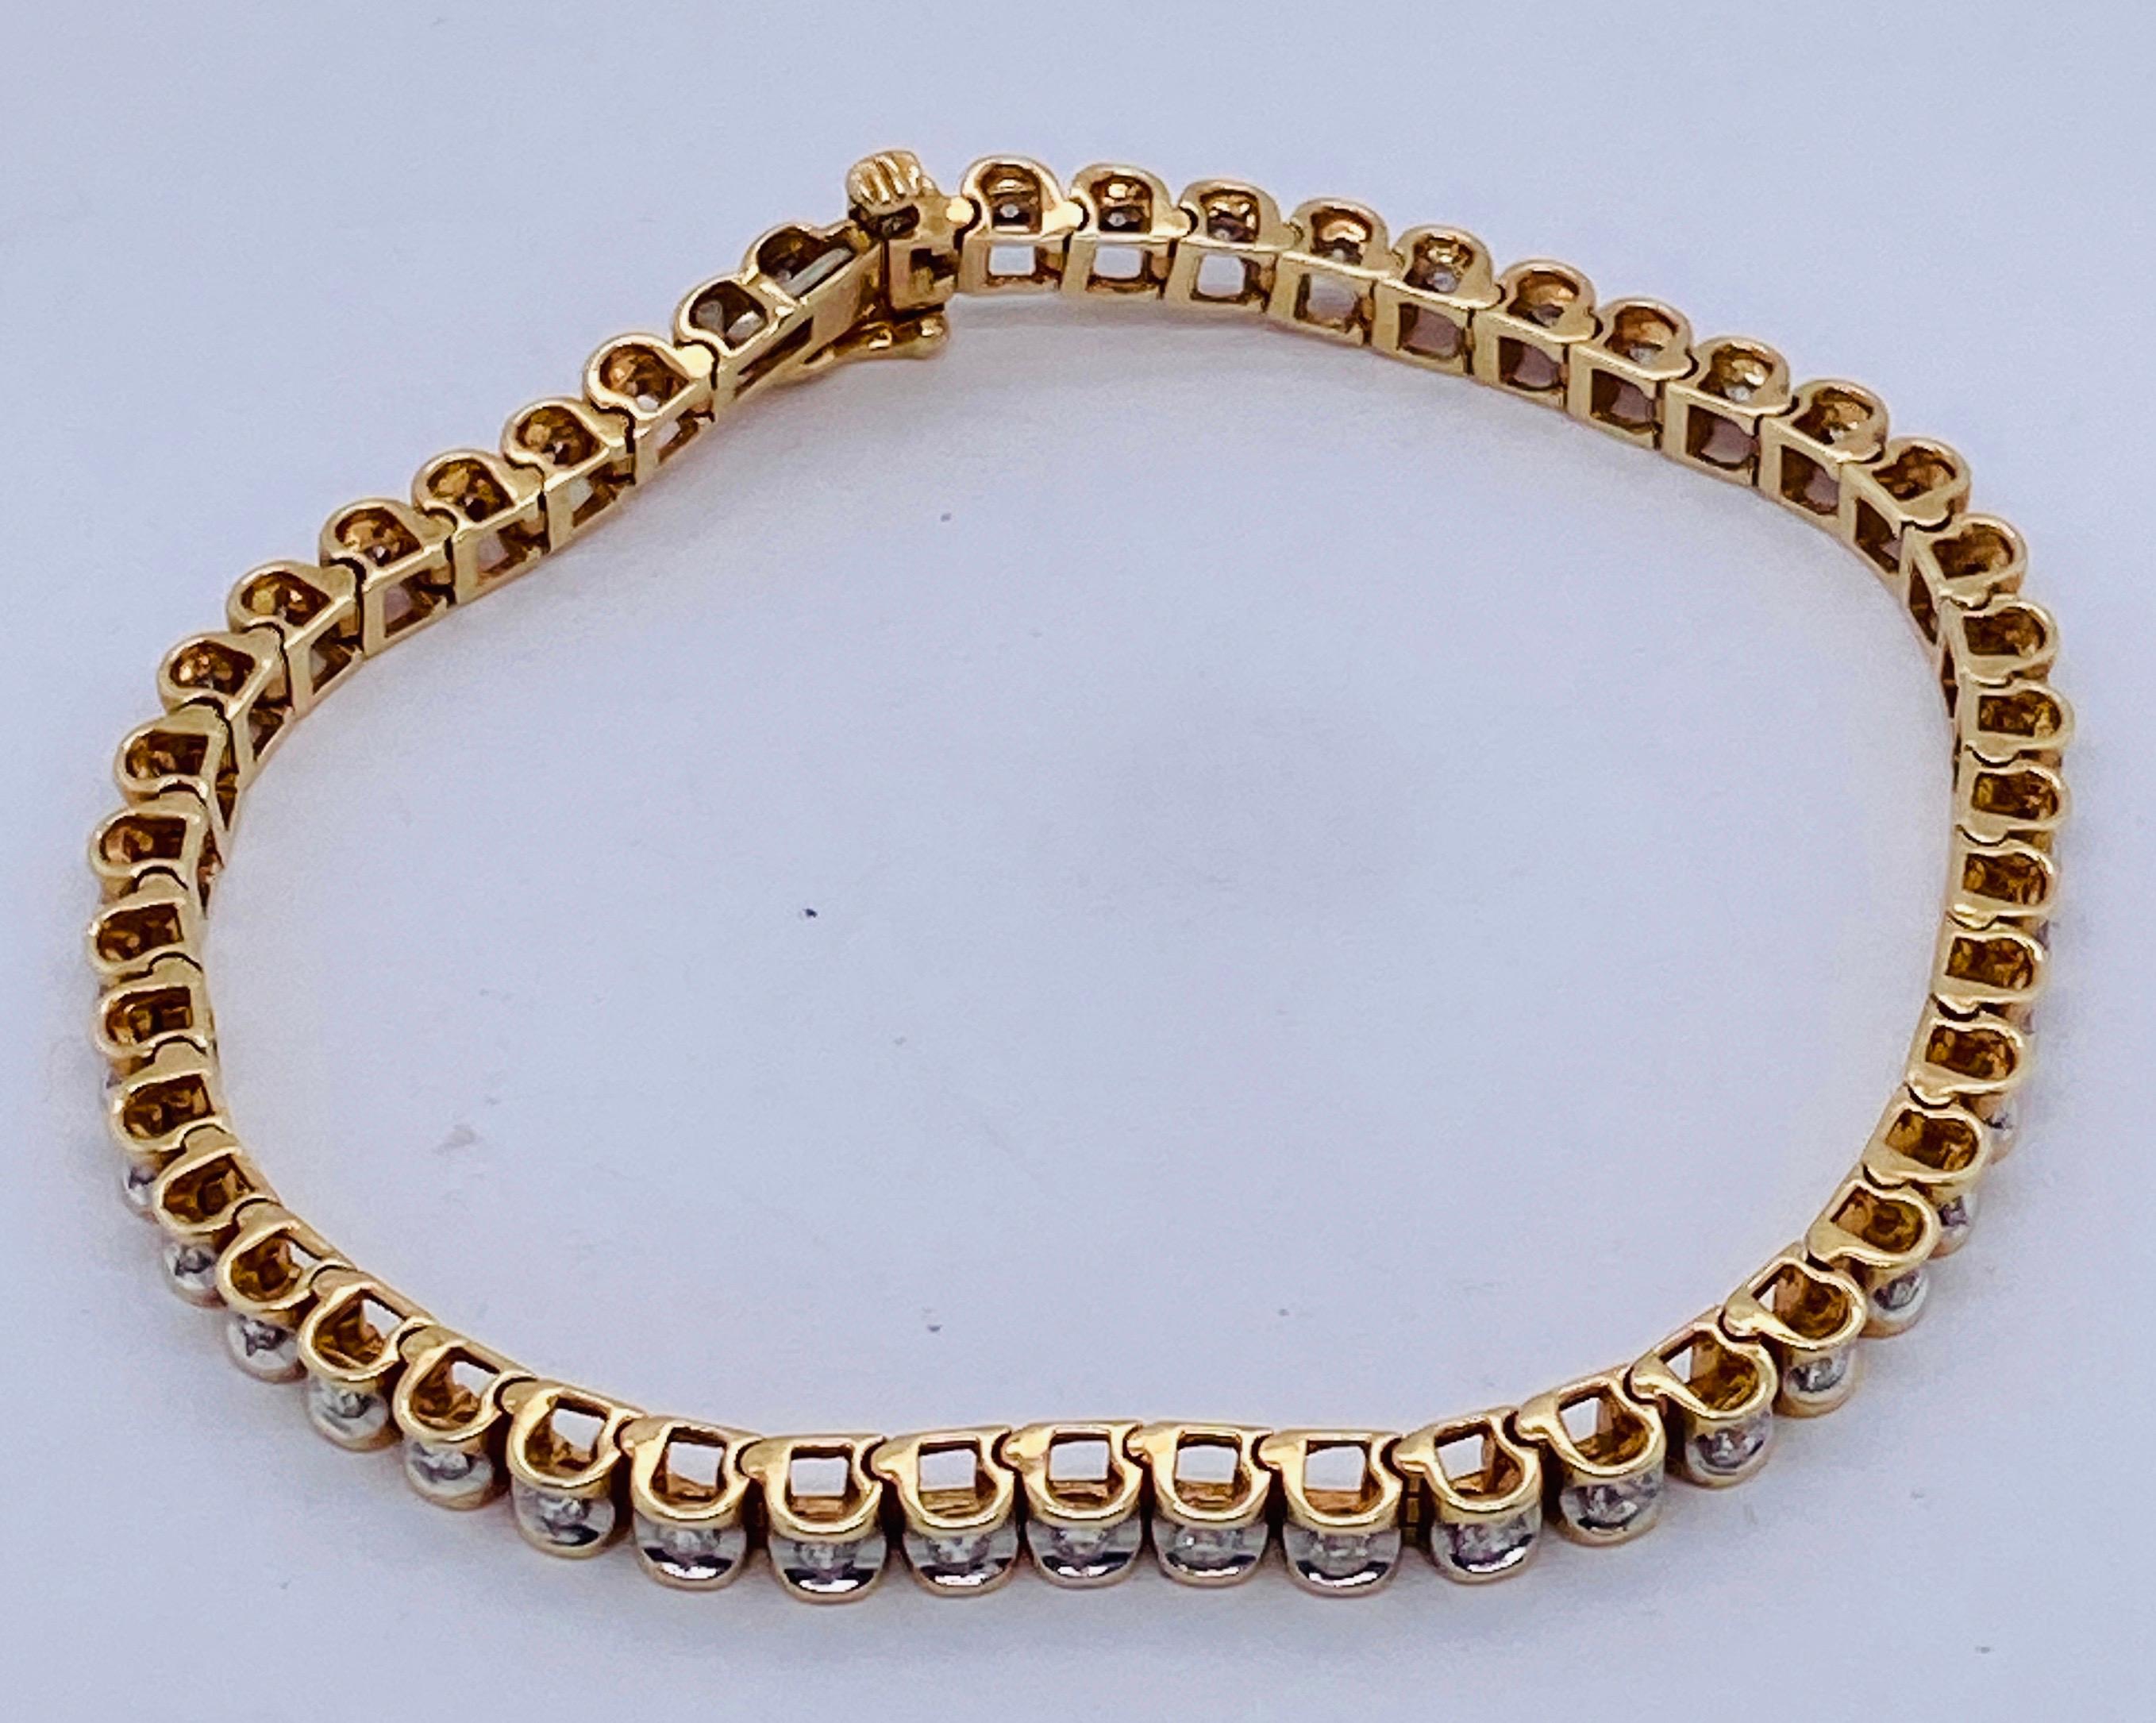 14 Karat Gold Diamond Tennis Bracelet 1.5 Carat total diamond weight. 
14kt Gold Diamond Tennis Bracelet, 1.5 tcw, 7.25